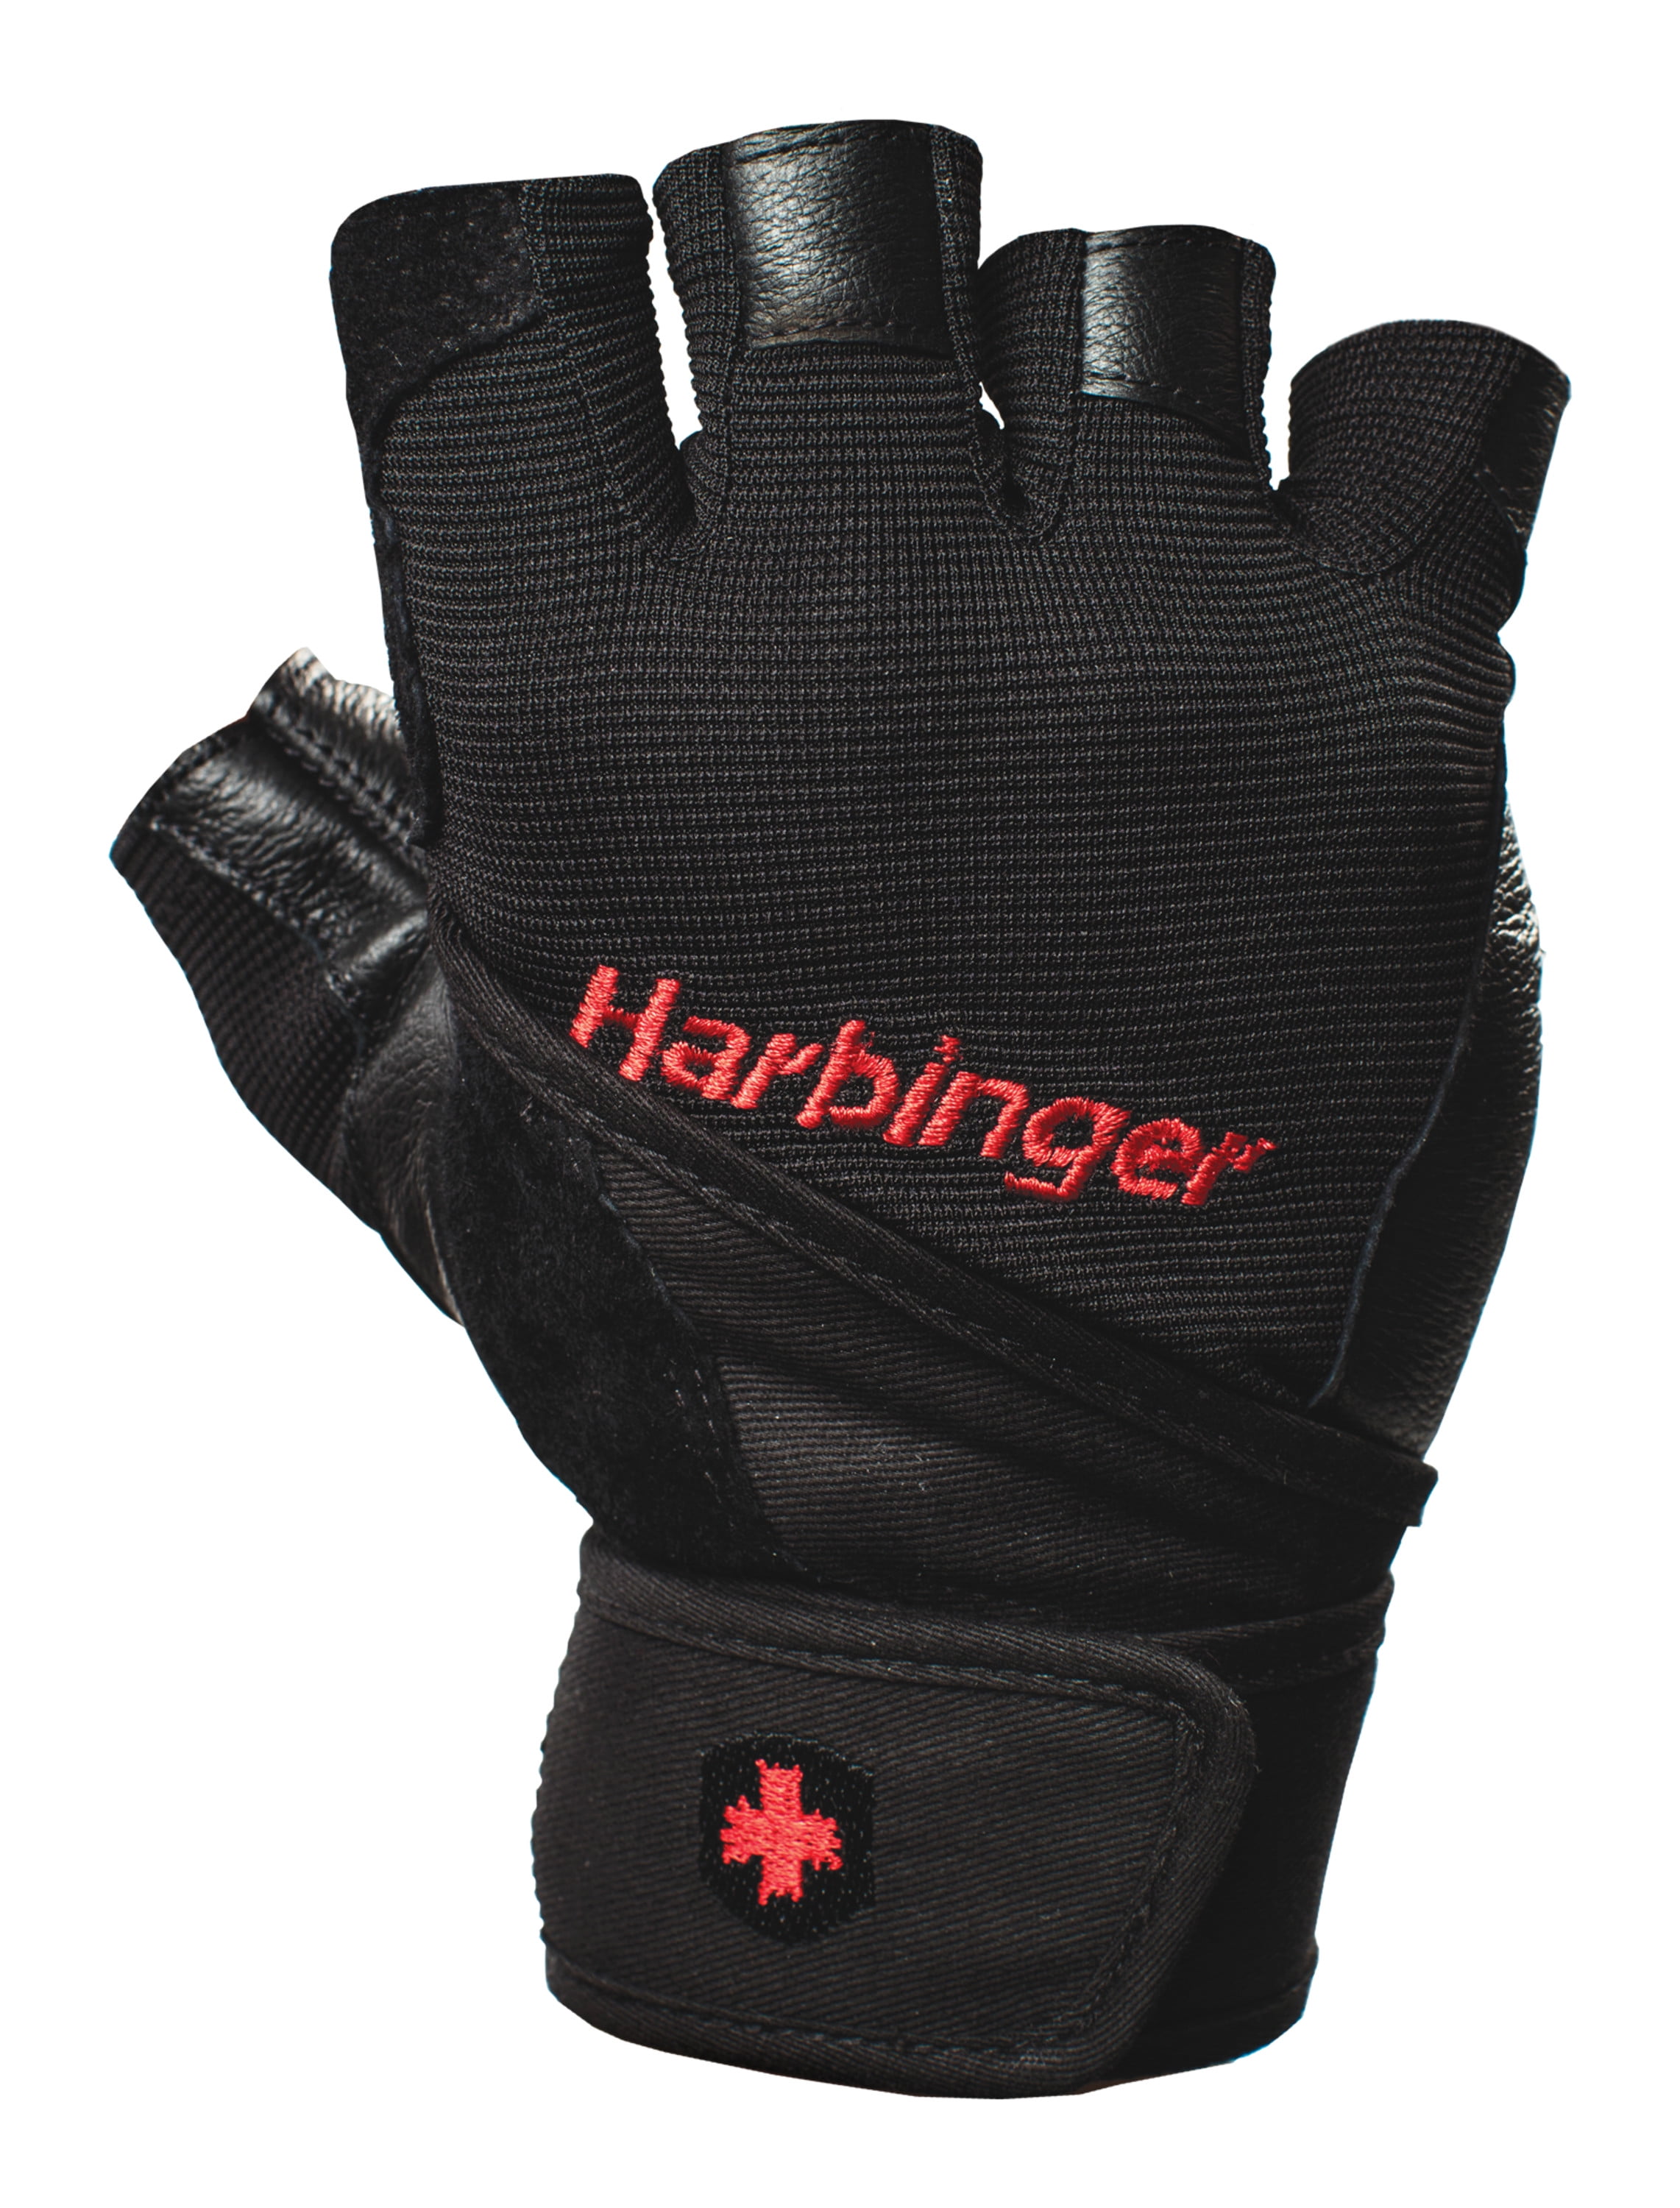 Black Harbinger Unisex Training Grip Wrist Wrap Weight Lifting Gloves